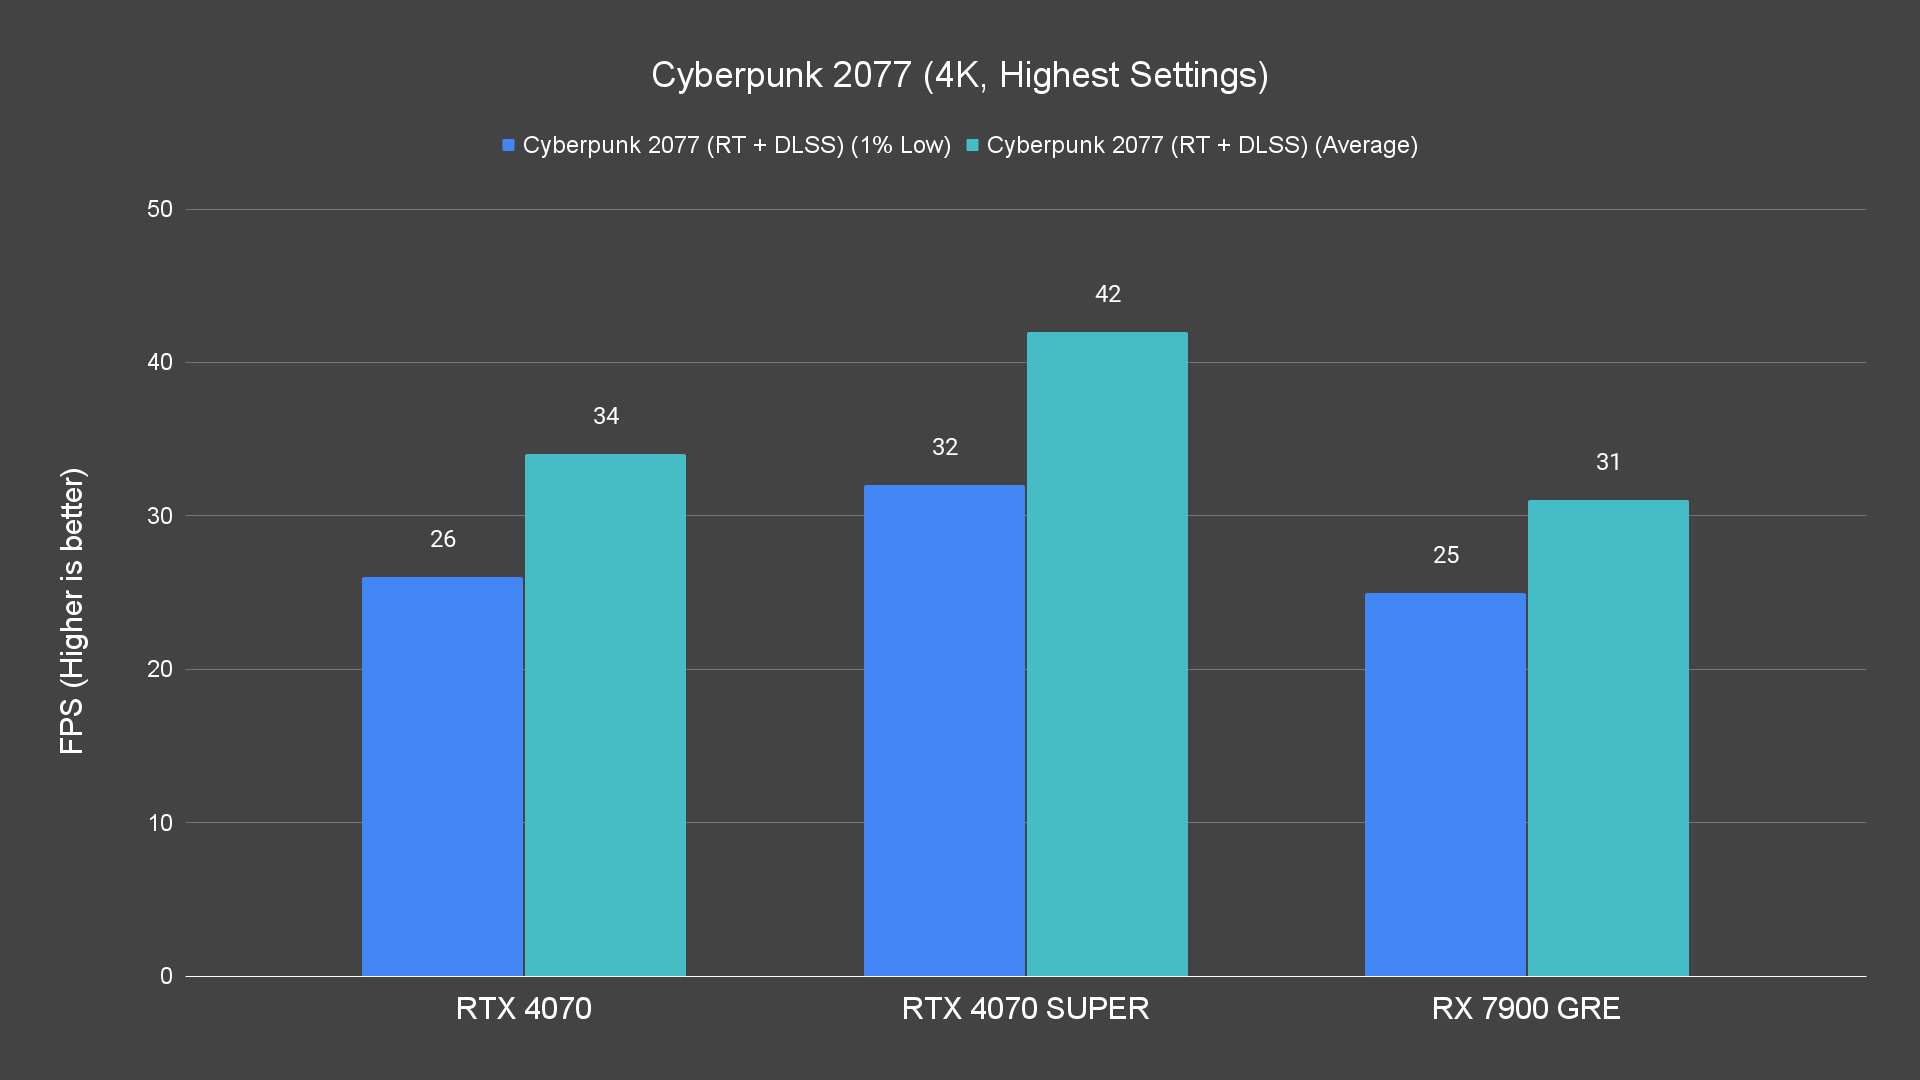 Cyberpunk 2077 (4K, Highest Settings) RX 7900 GRE